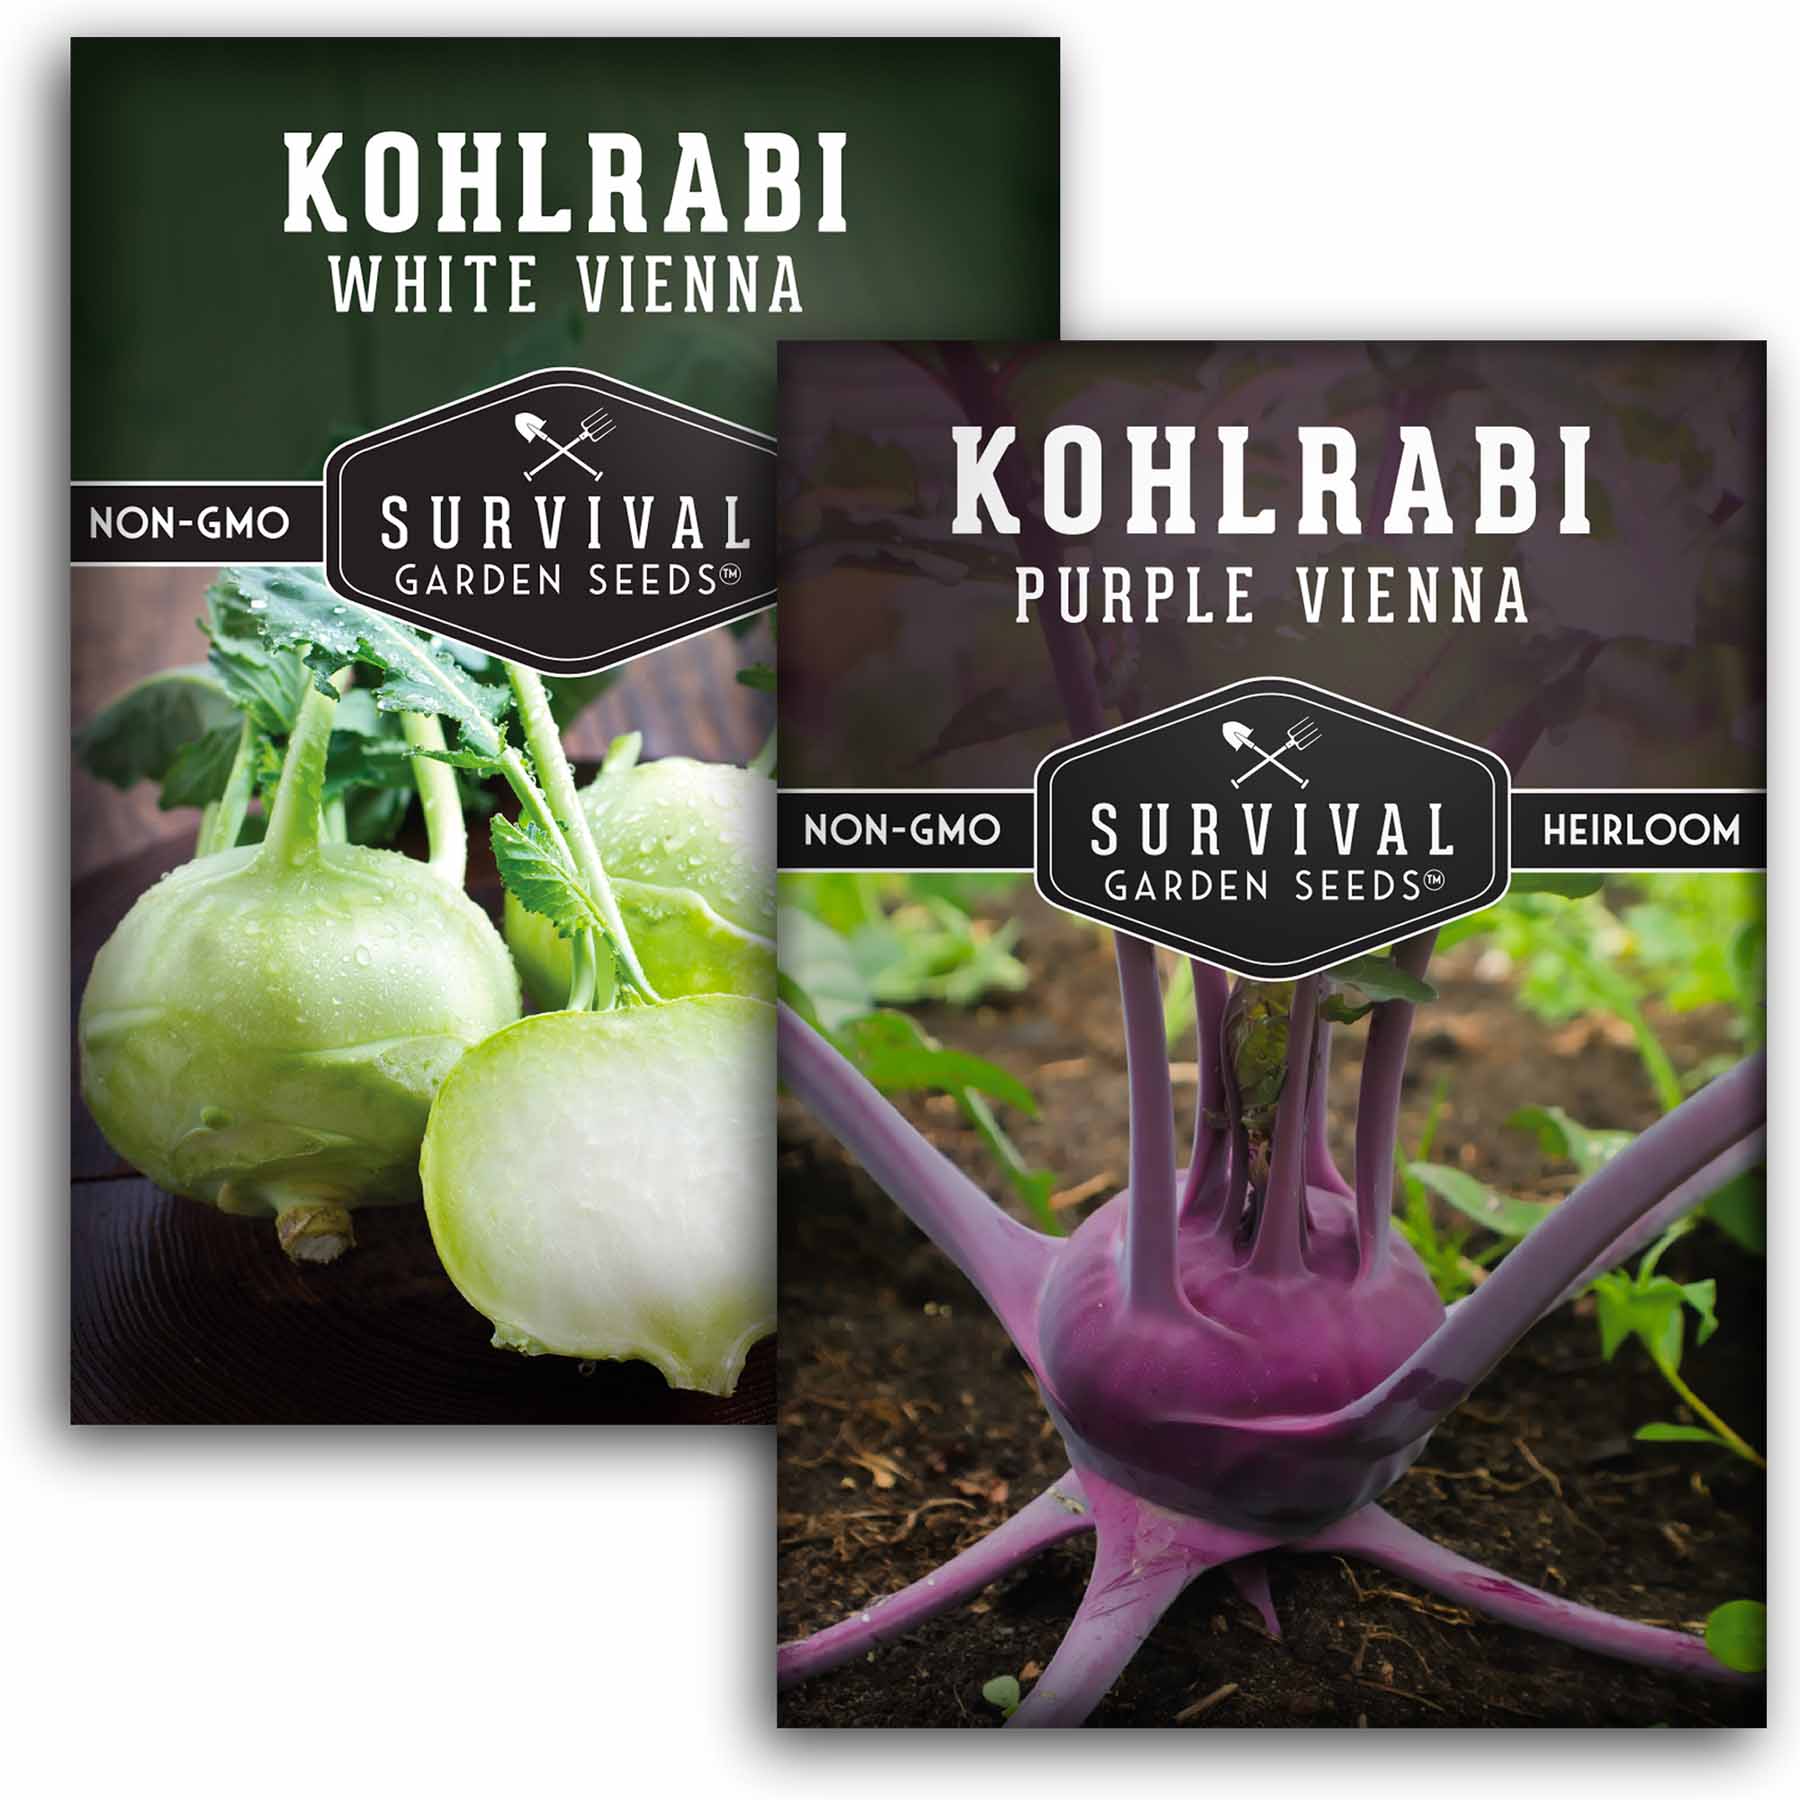 Kohlrabi collection - 2 packets of kohlrabi seeds